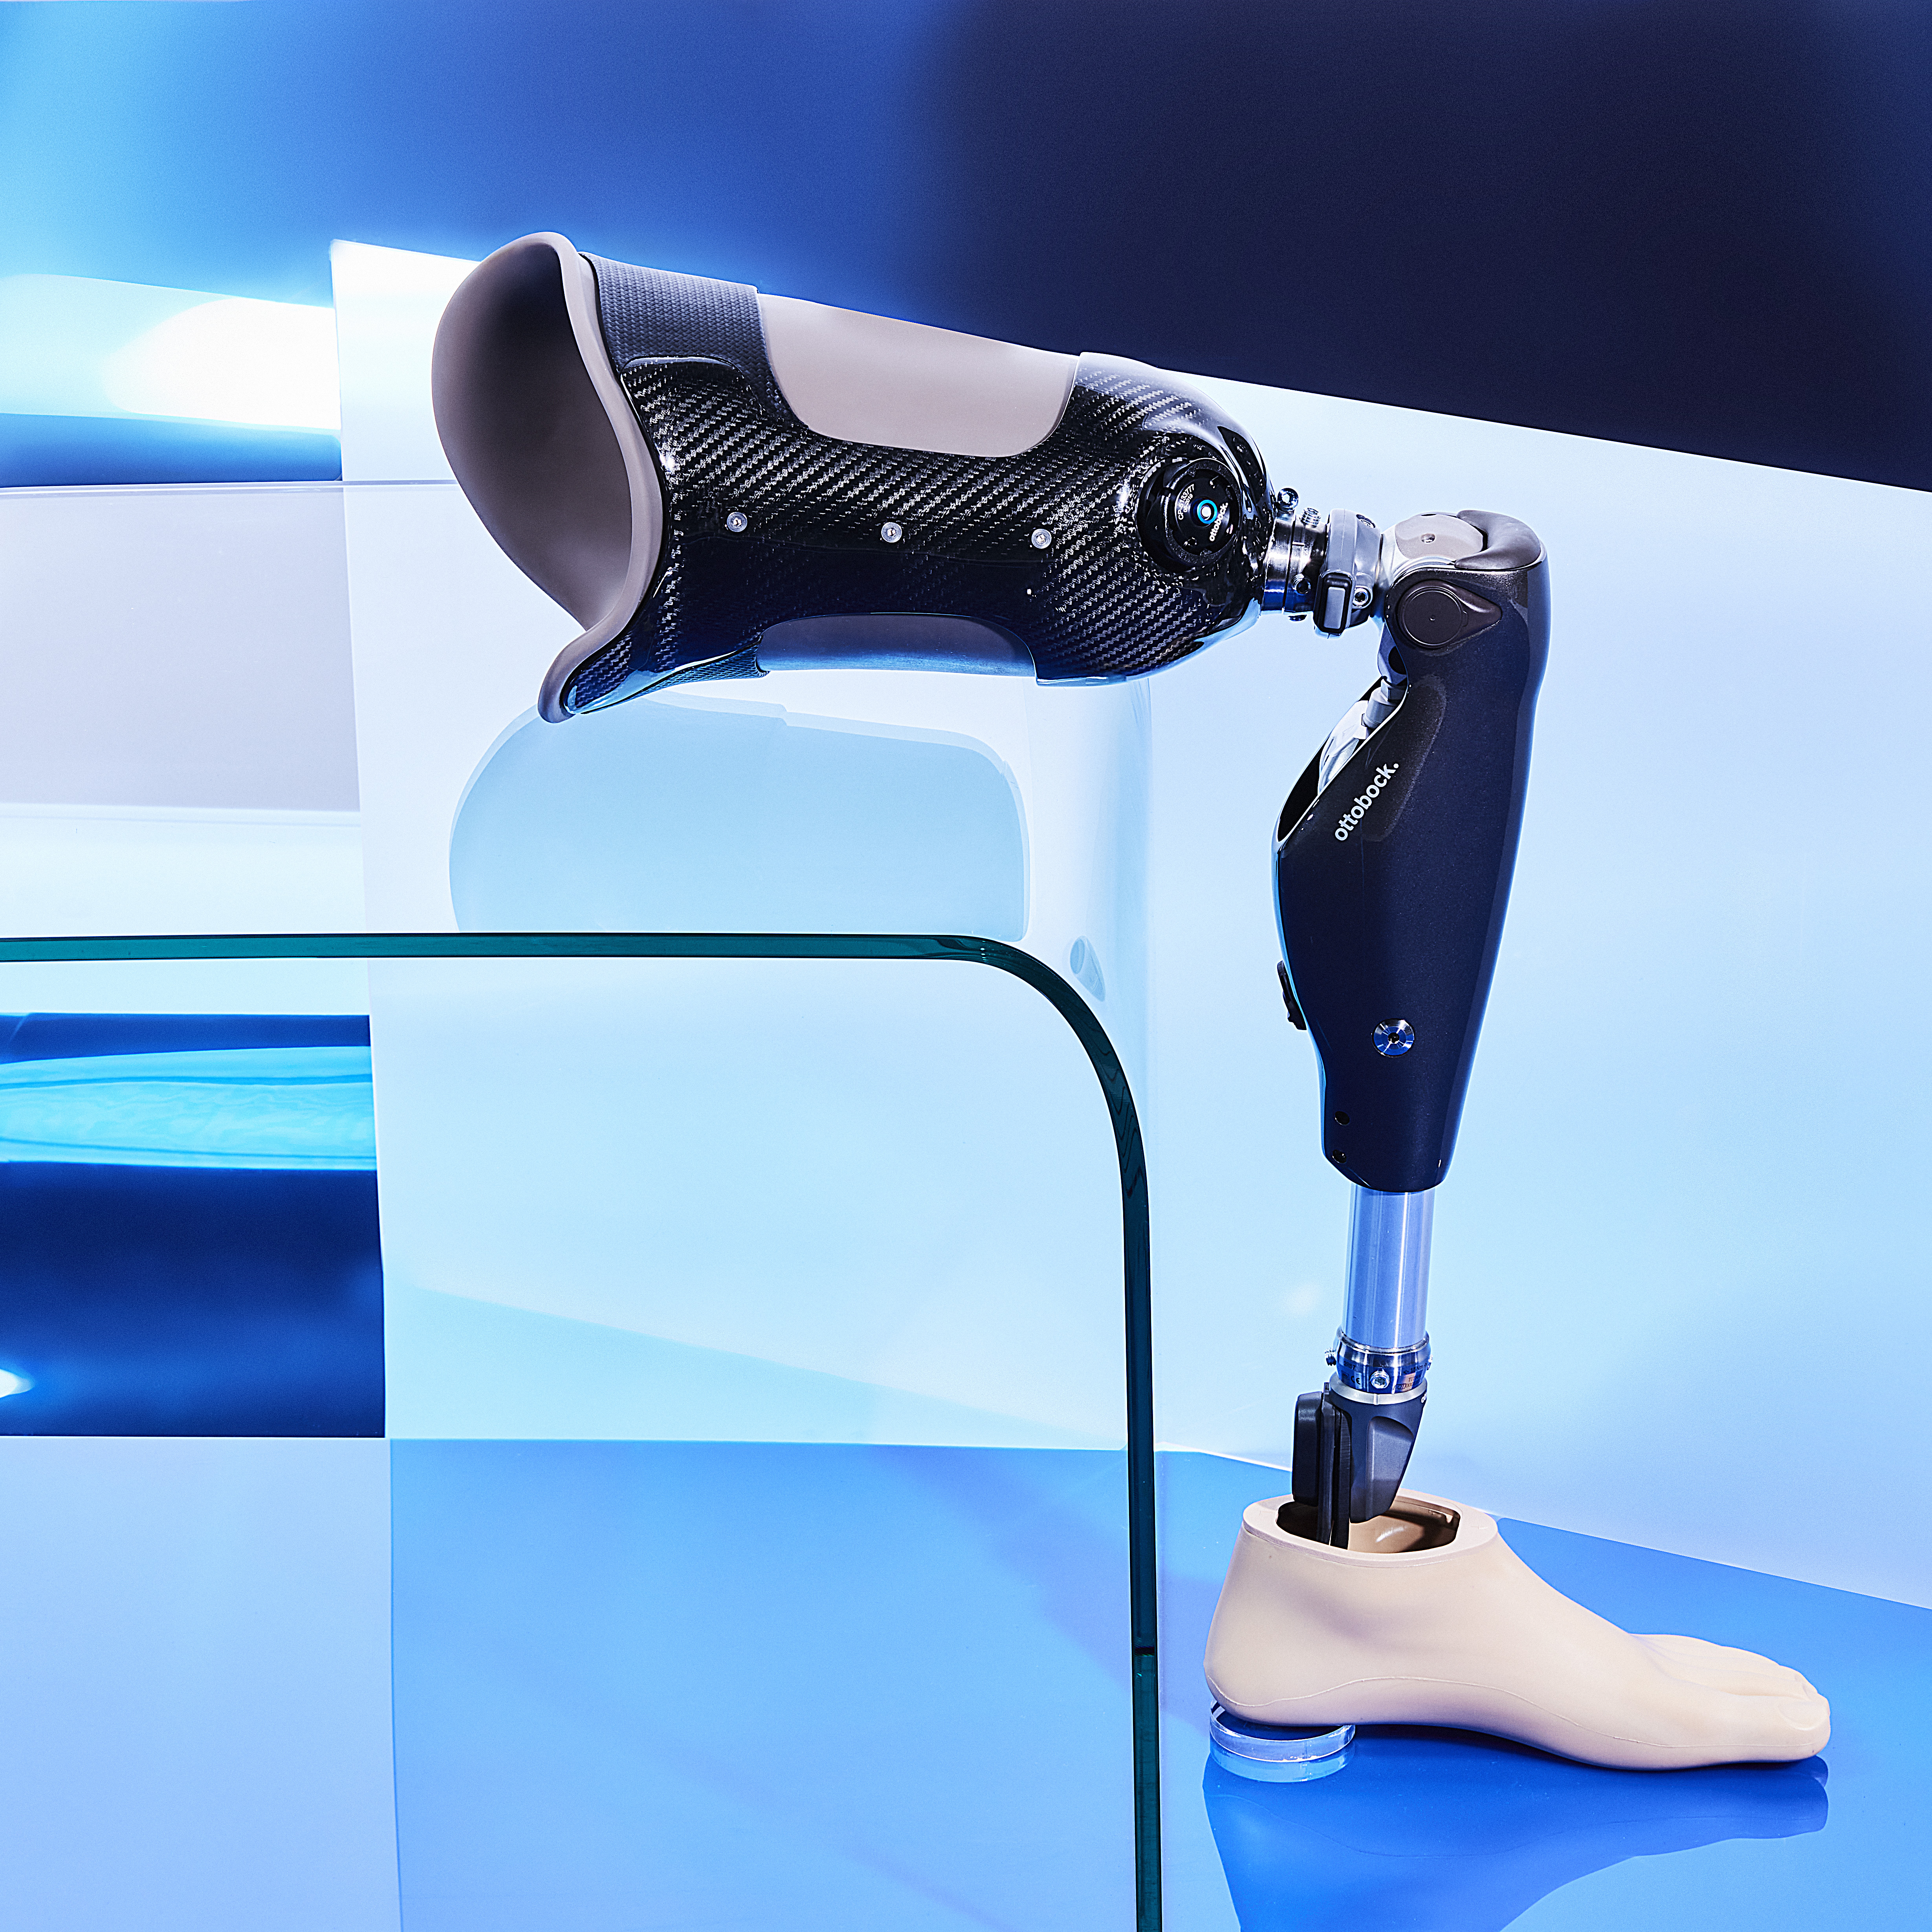 29 Prosthetic Fashion ideas  prosthetic leg, prosthetics, amputee